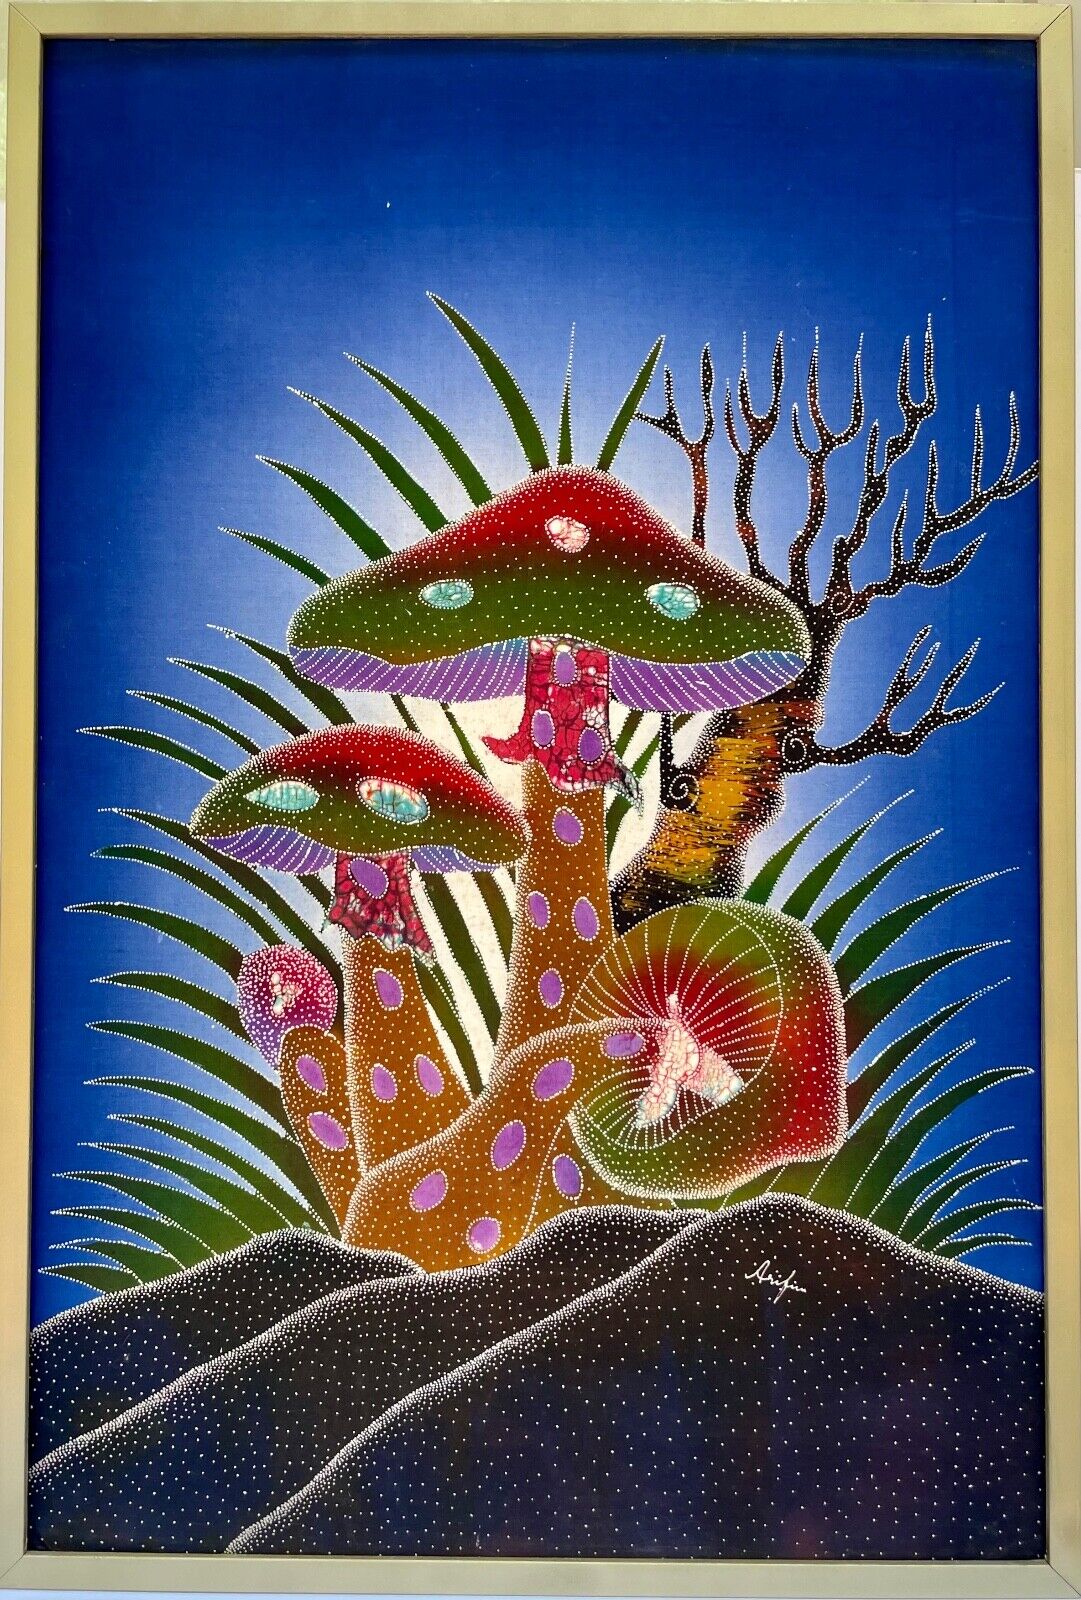 Vtg Framed Original Signed Indonesian Batik Waxing/Dyeing  Art Mushrooms 24